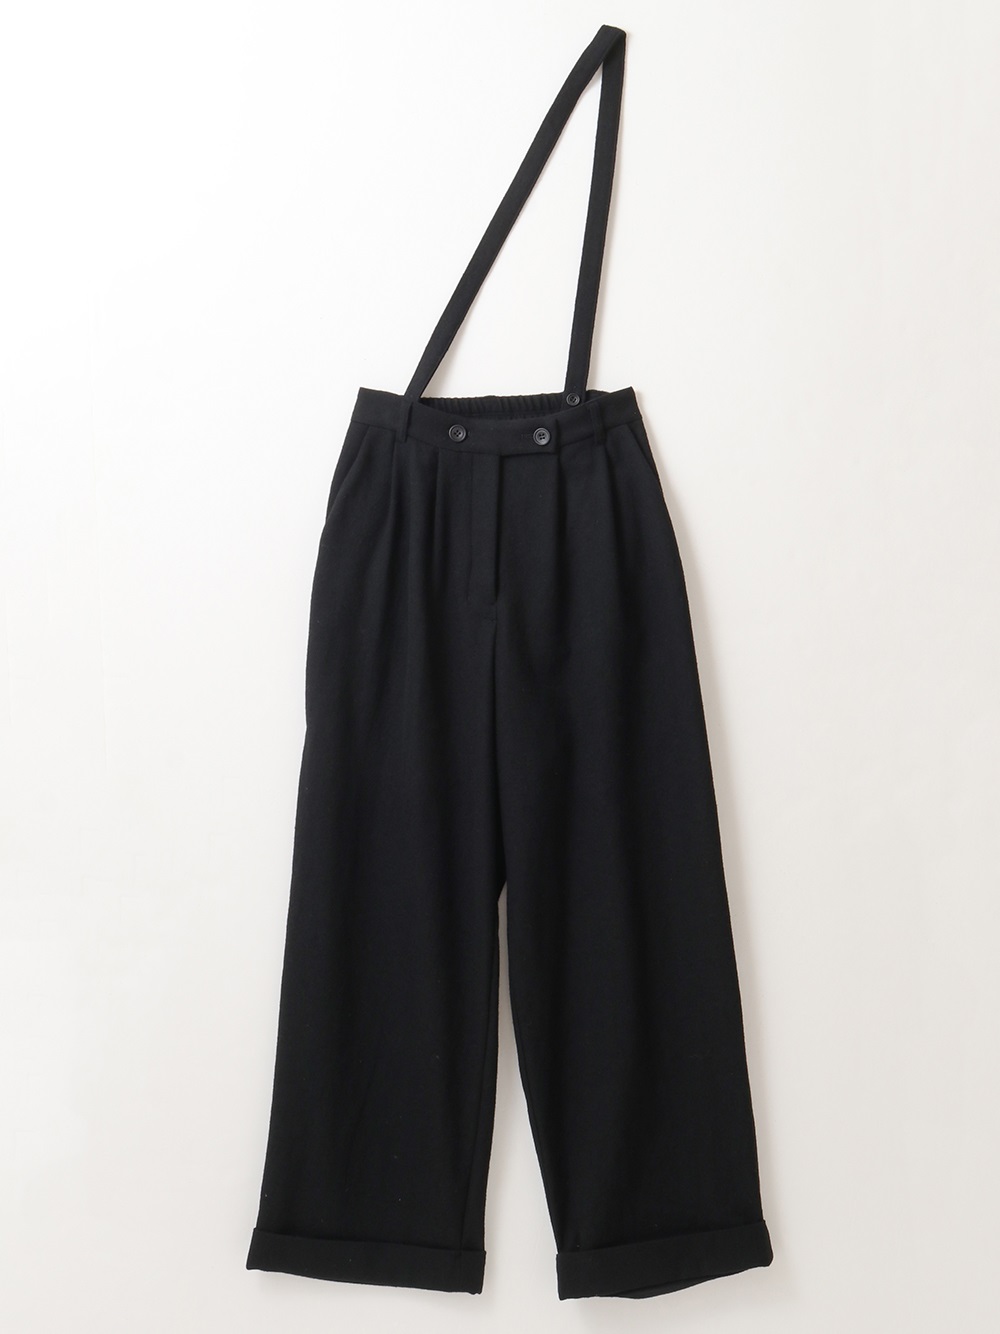 Suspender Pants(00ブラック-３６)